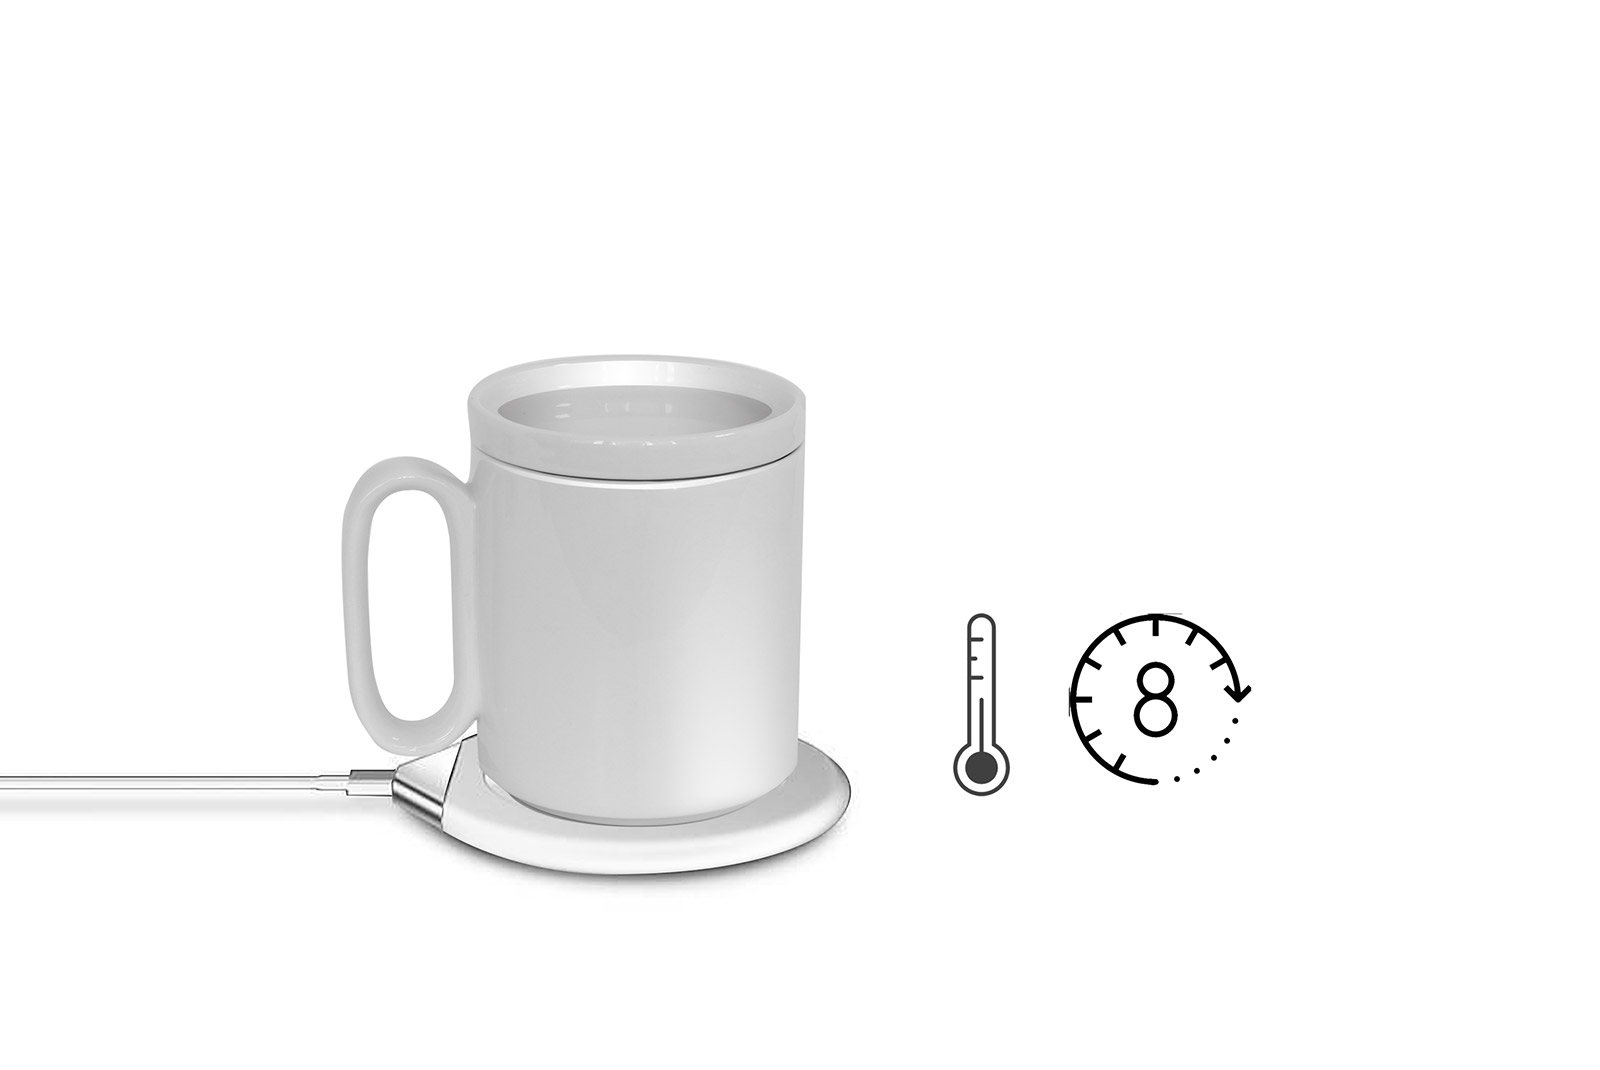 Ui Mug & Heater / Wireless Charger Set - Black Walnut by OHOM - Fy